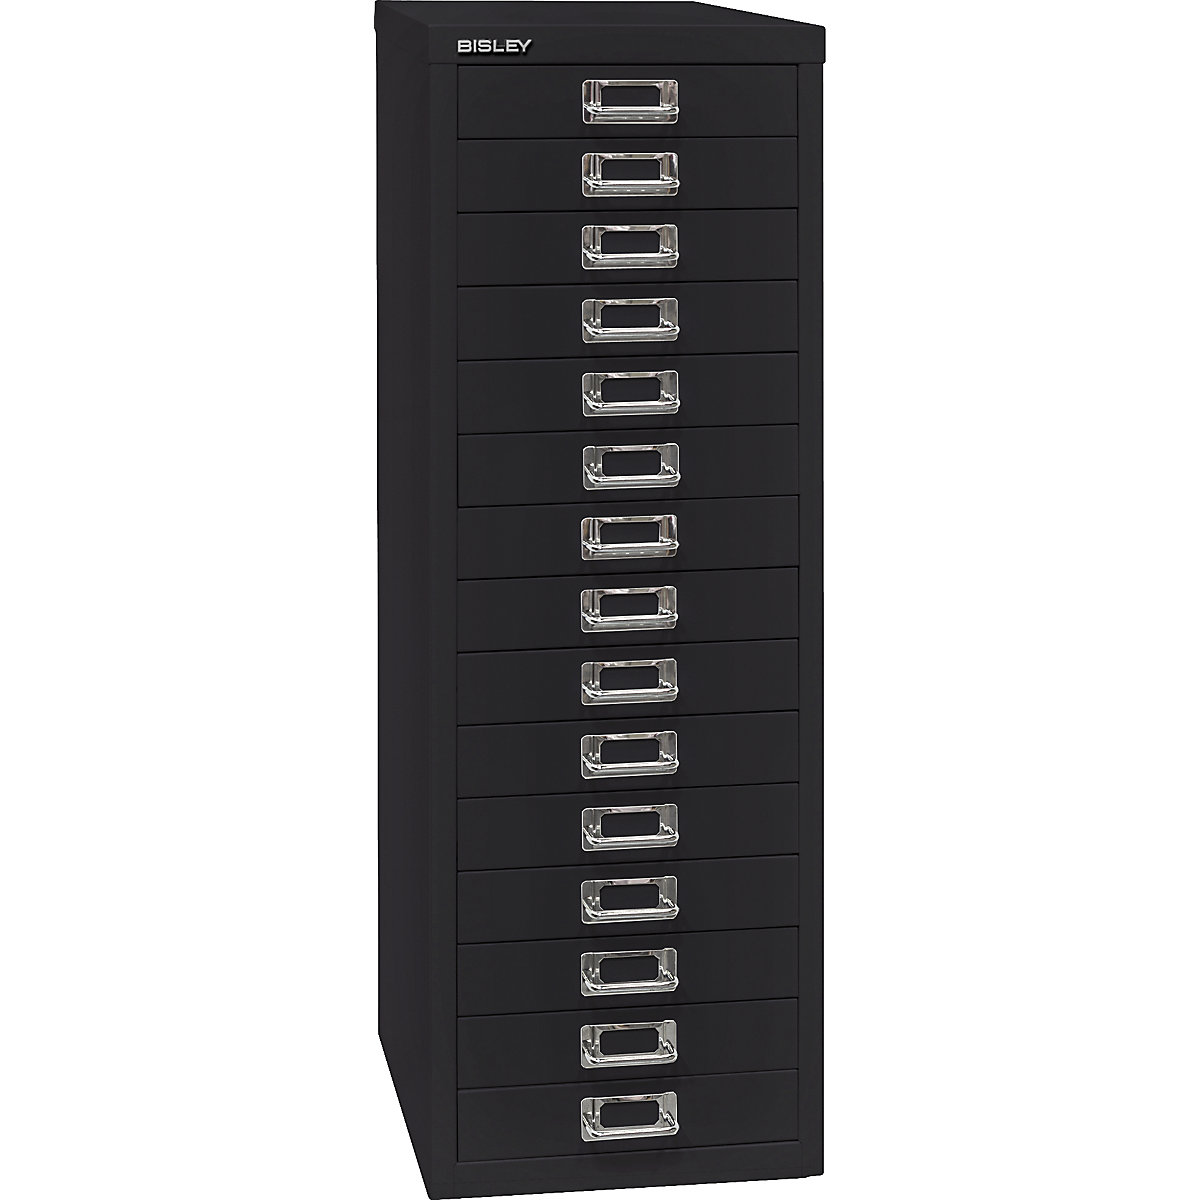 MultiDrawer™ 39 series – BISLEY, A4, 15 drawers, black-14